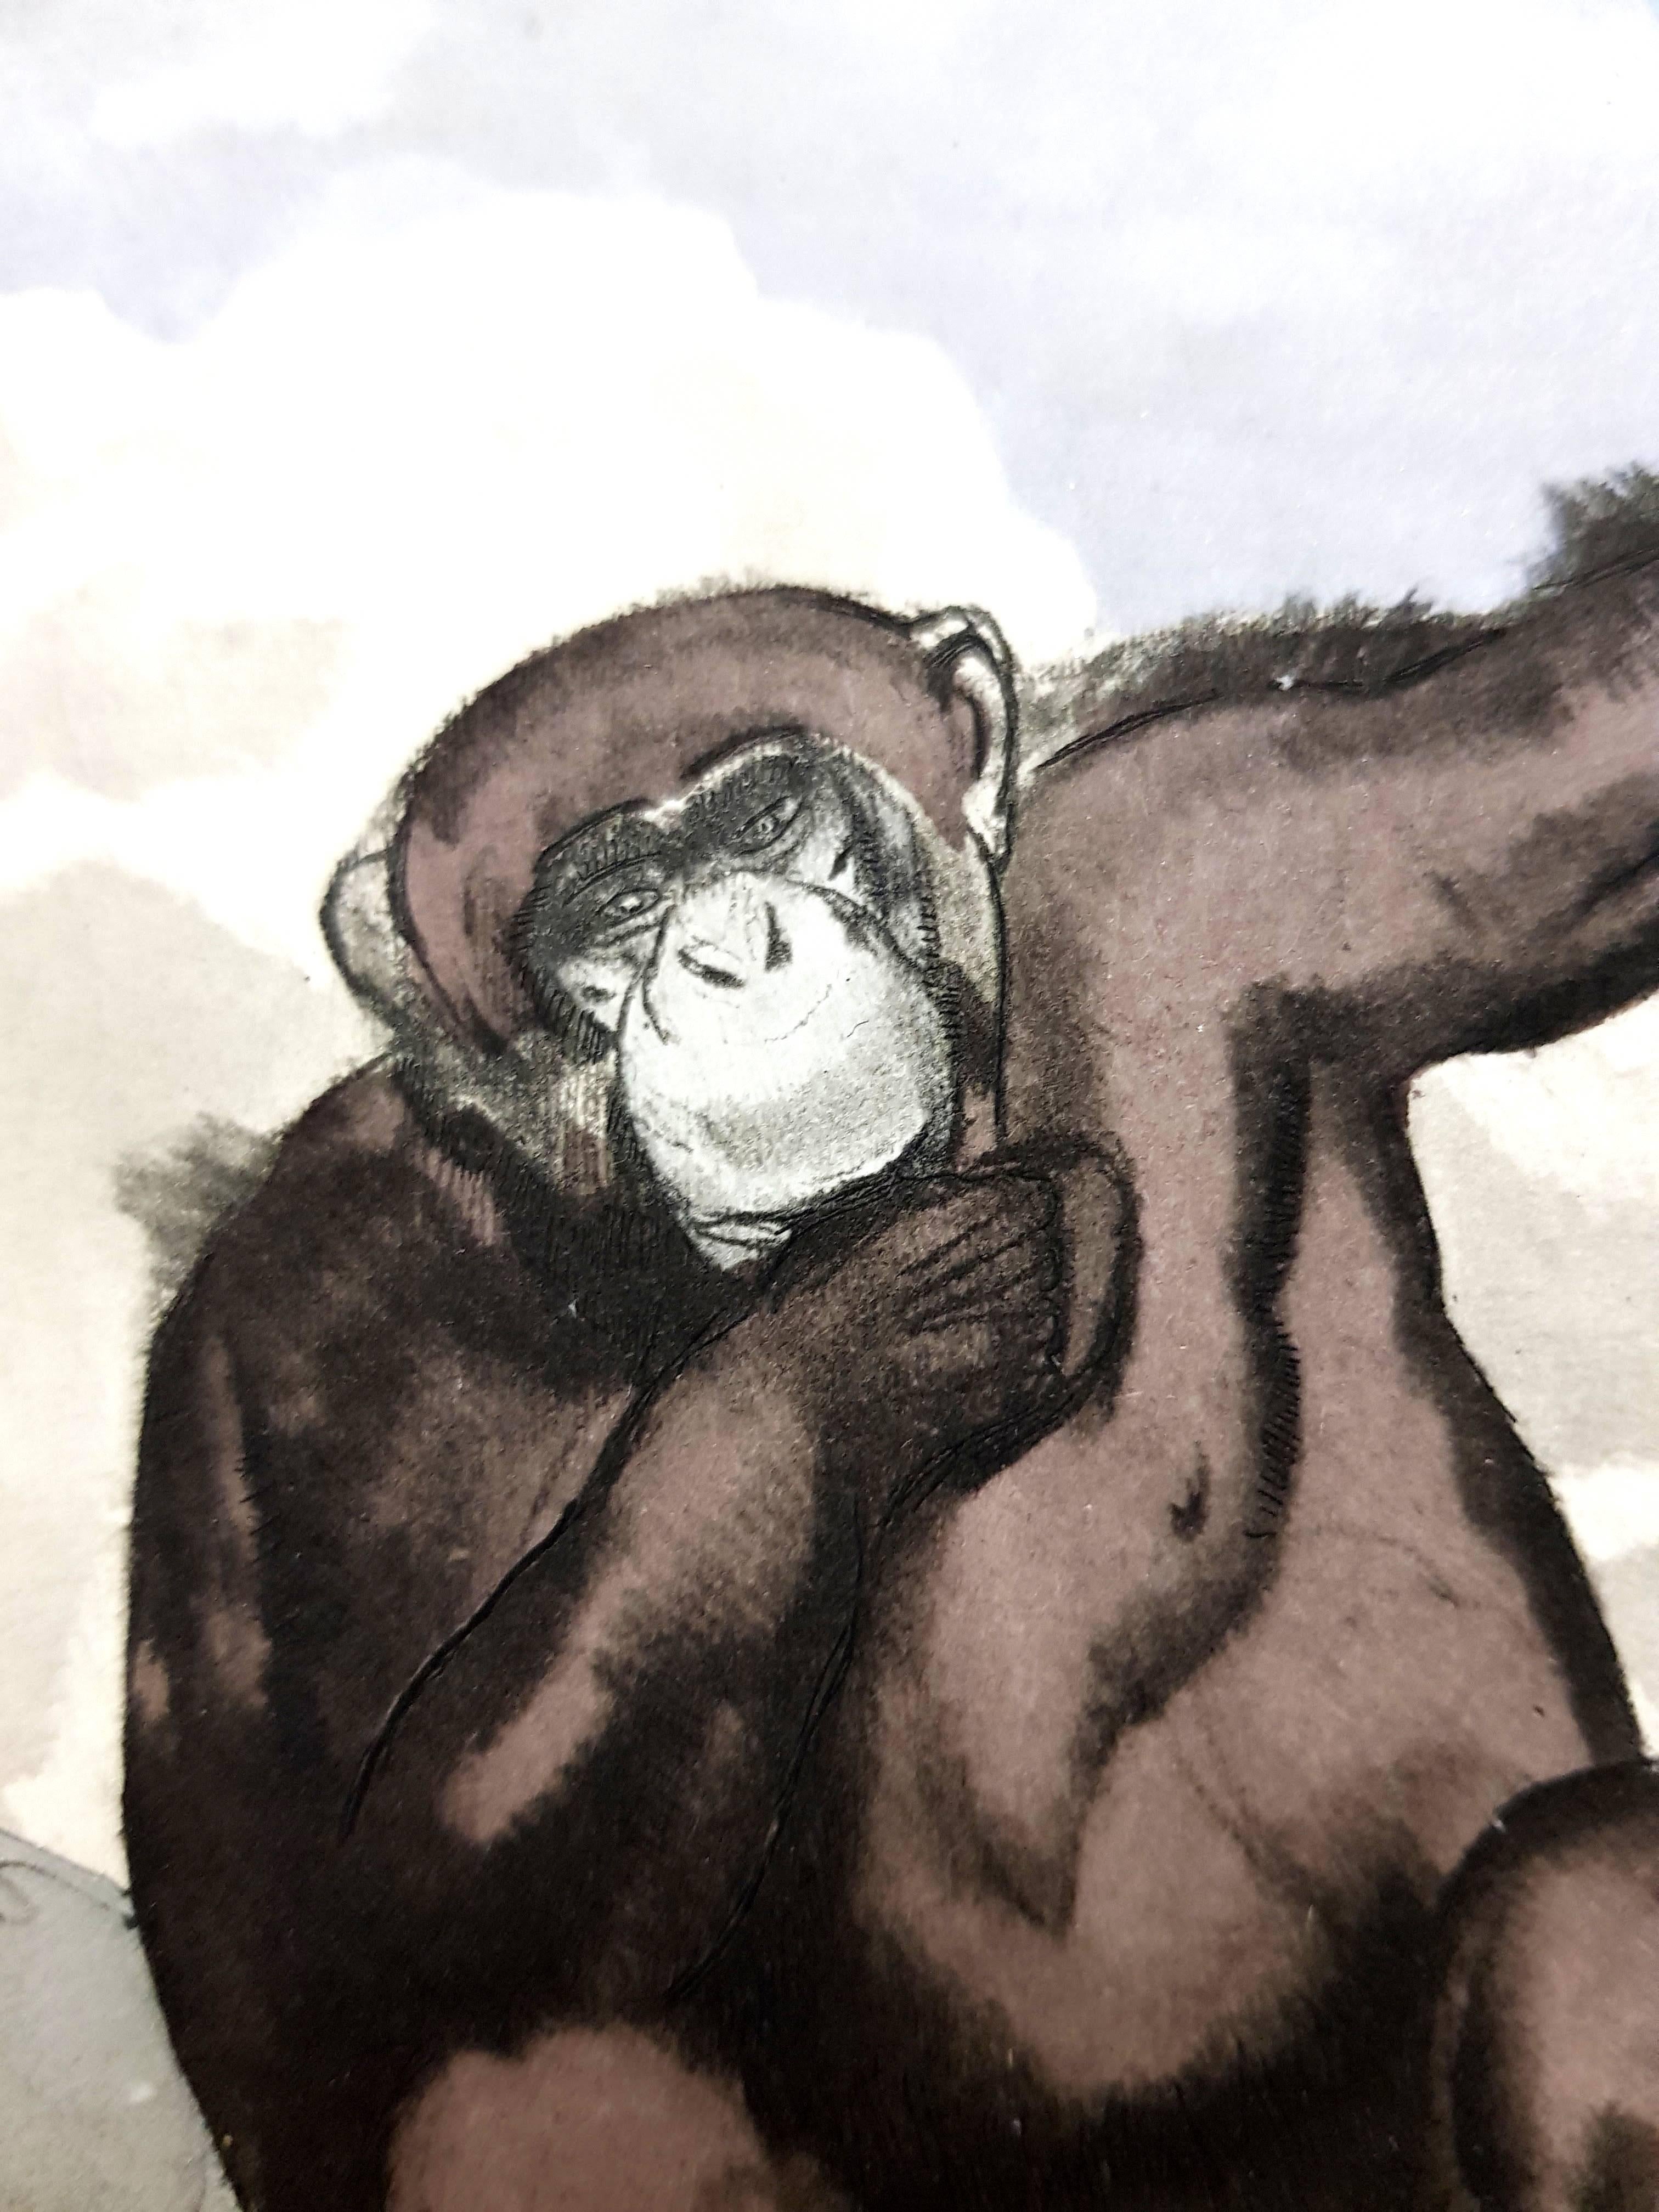 Paul Jouve - Chimpanzee - Original Engraving - Modern Print by Pierre-Paul Jouve